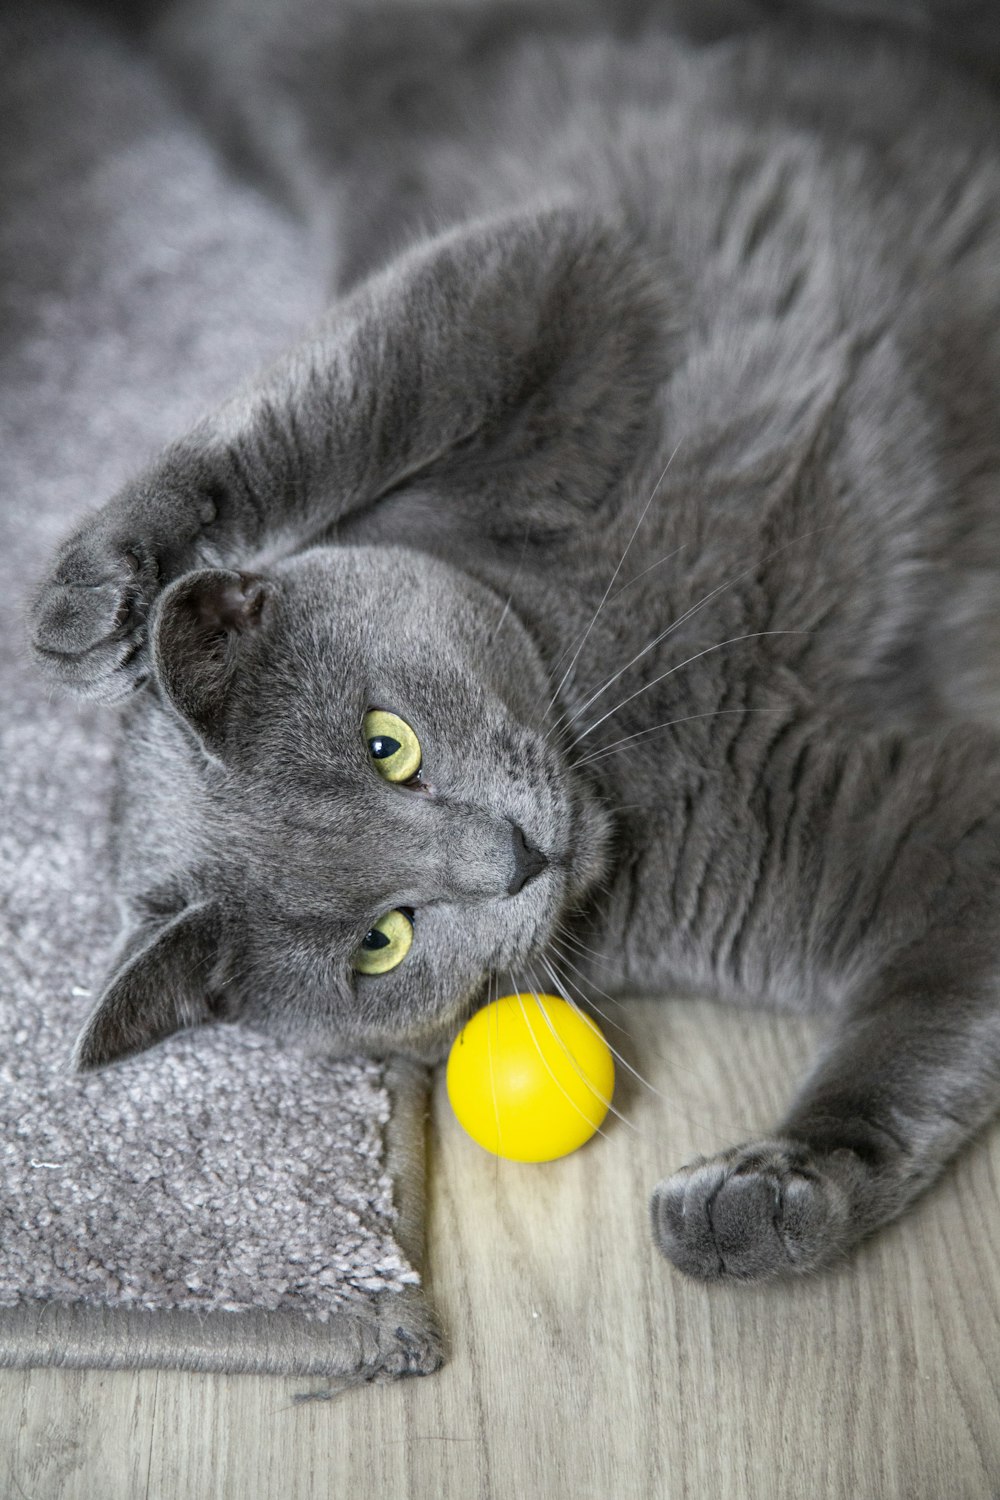 Blue Cat Pictures | Download Free Images on Unsplash